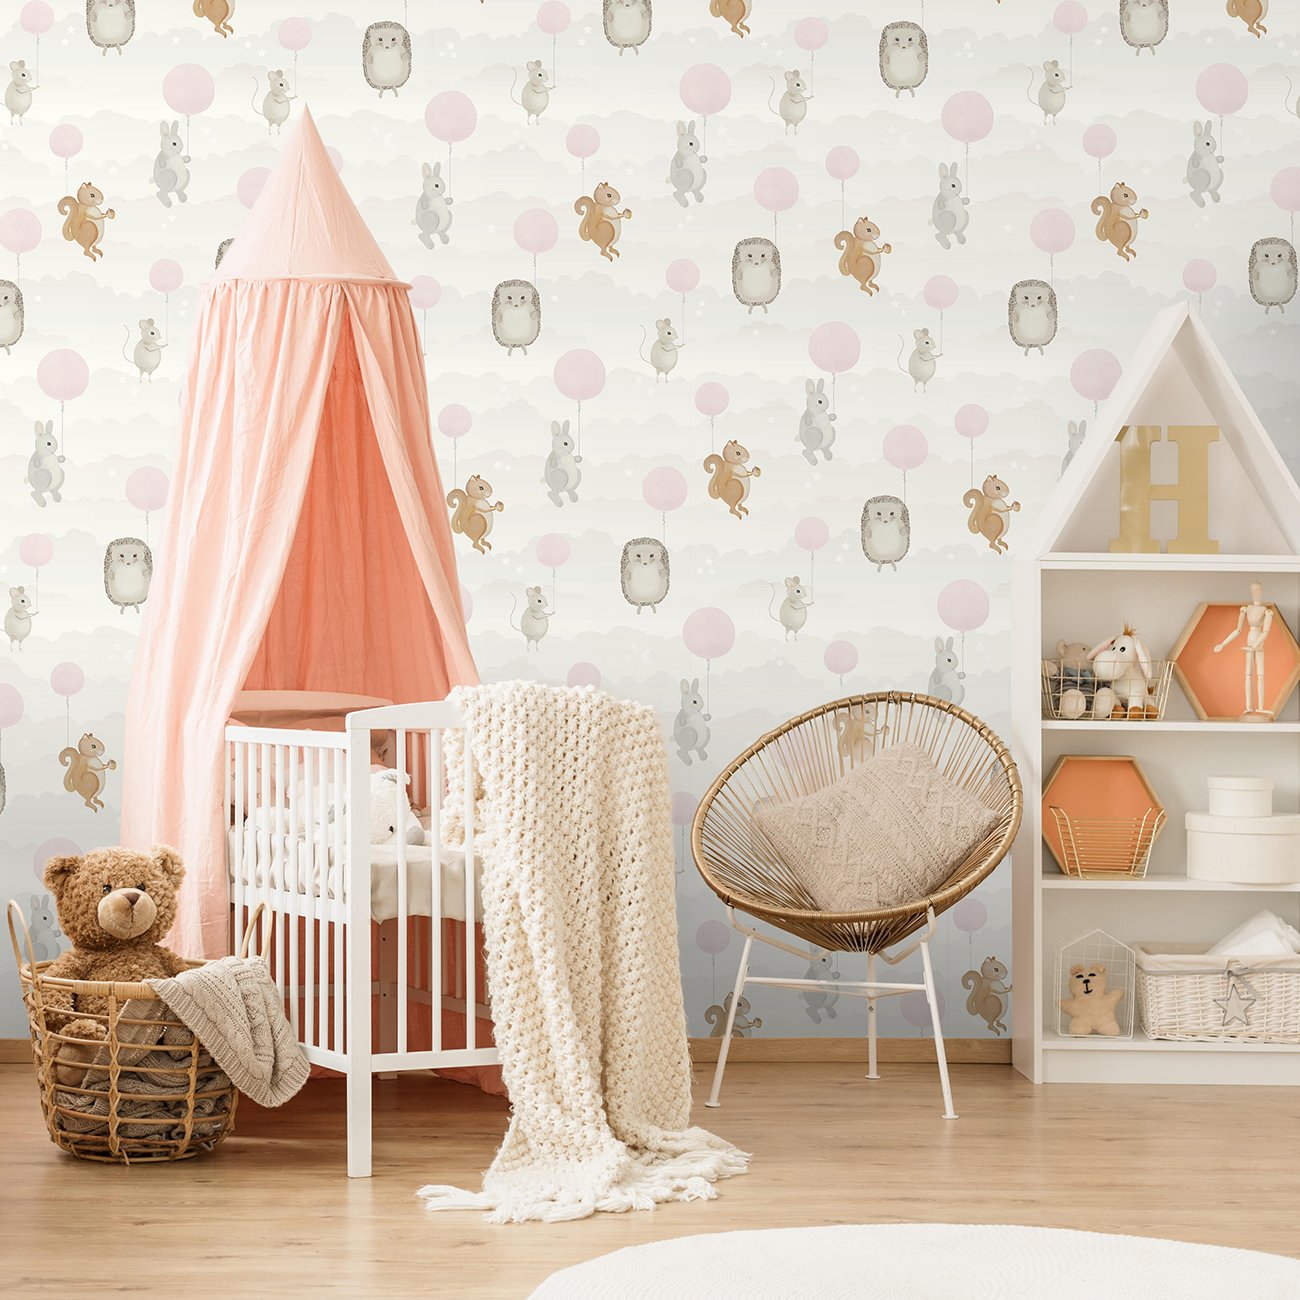 papel tapiz infantil,producto,mueble,habitación,rosado,cama infantil